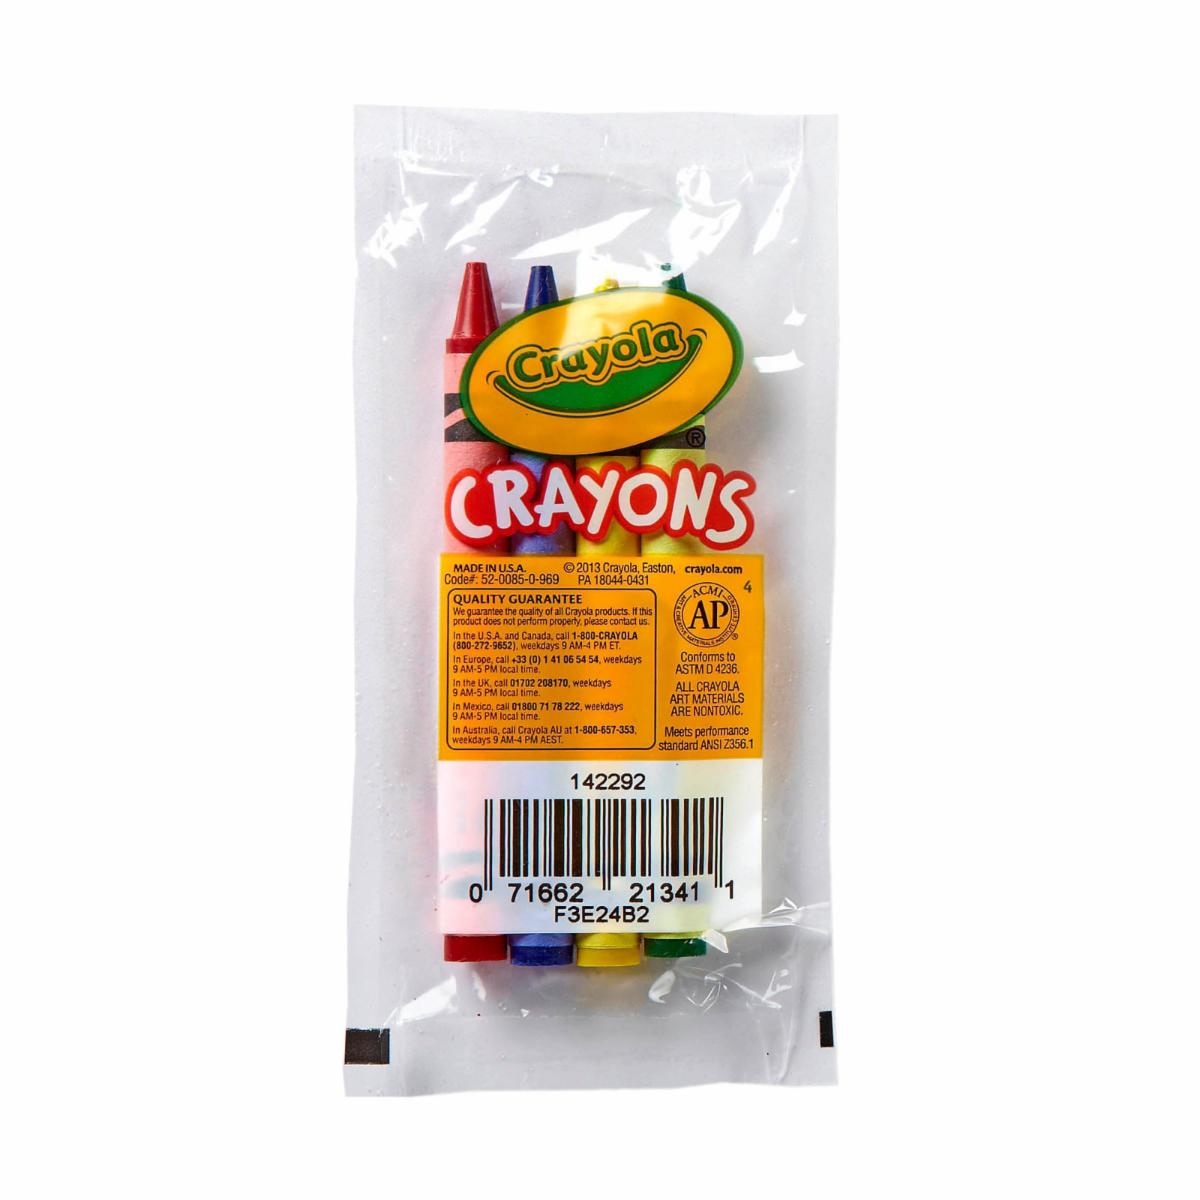 43638 - Crayola Crayons, Assorted Colors, 4-Count USA